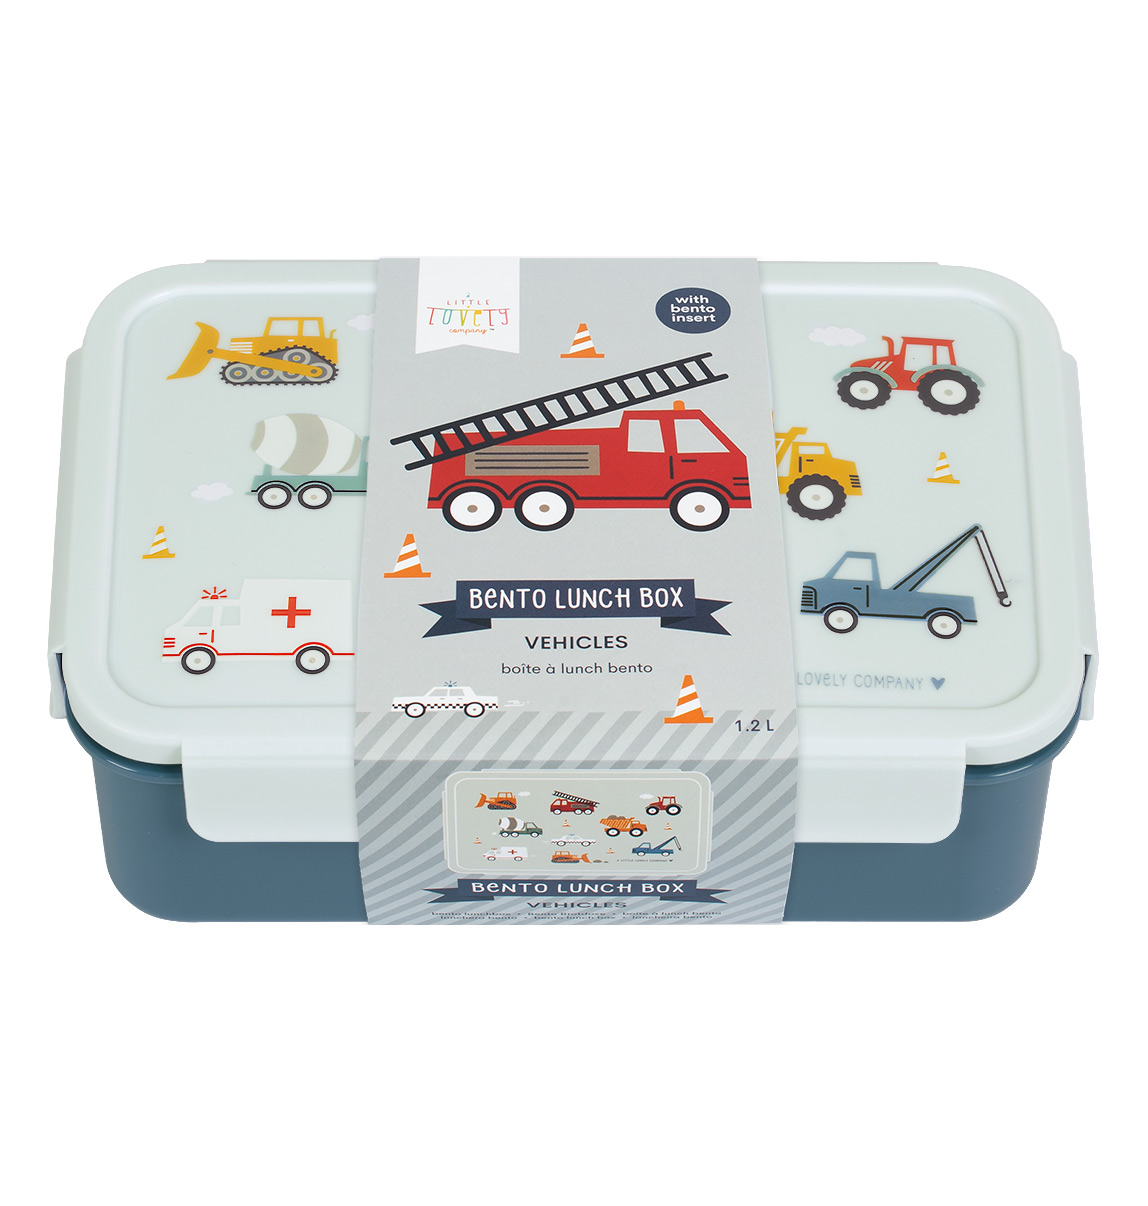 Bento Lunch Box / Little Lovley Compamy / Fahrzeuge 3